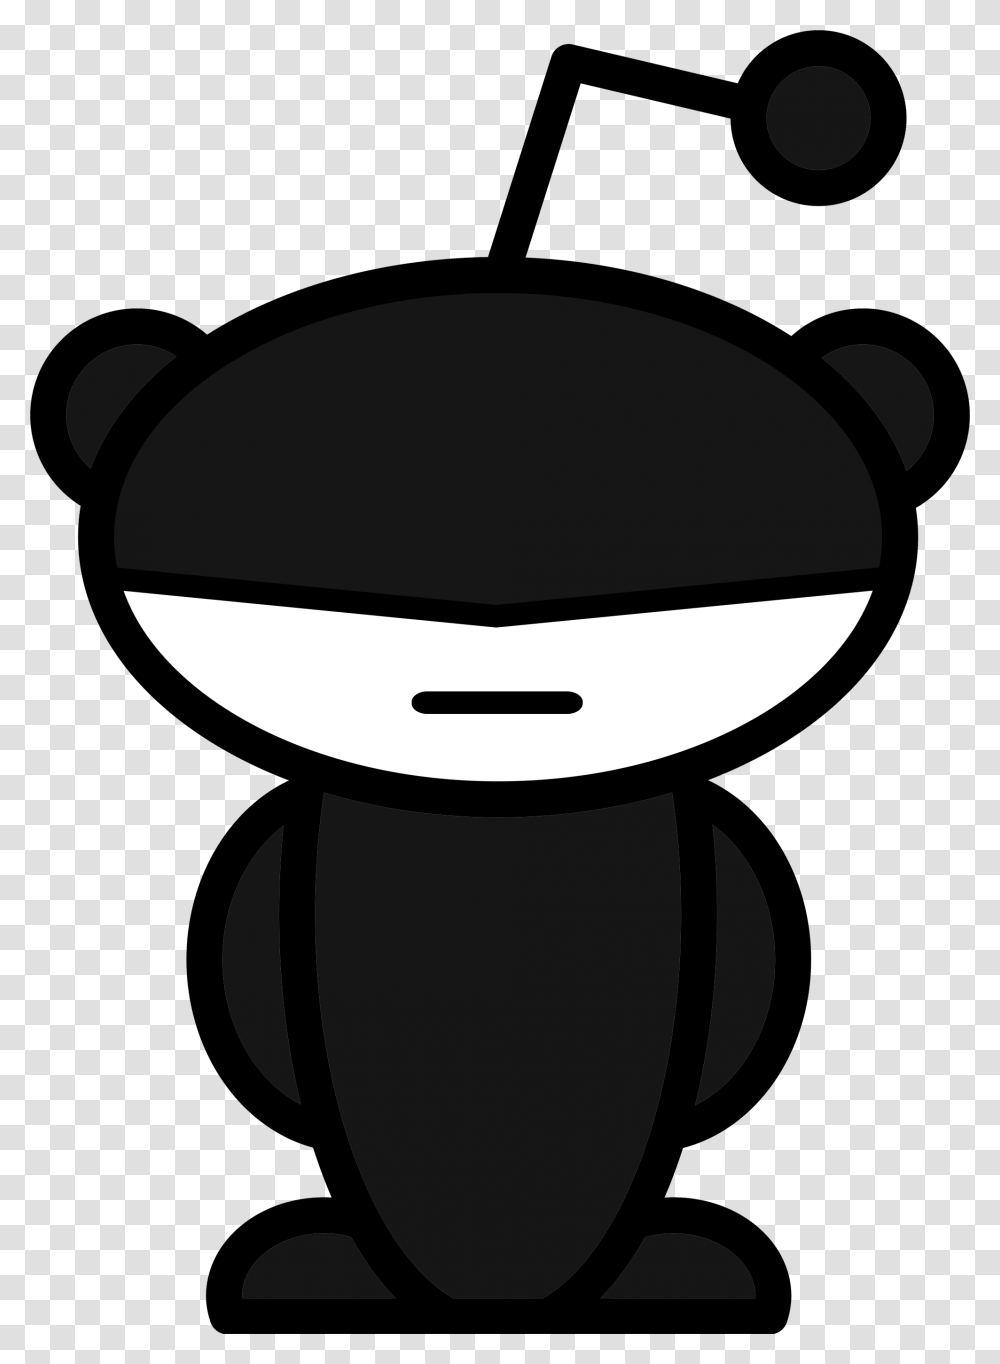 Snoo Reddit Clipart Reddit Question Mark, Lamp, Stencil, Silhouette, Label Transparent Png